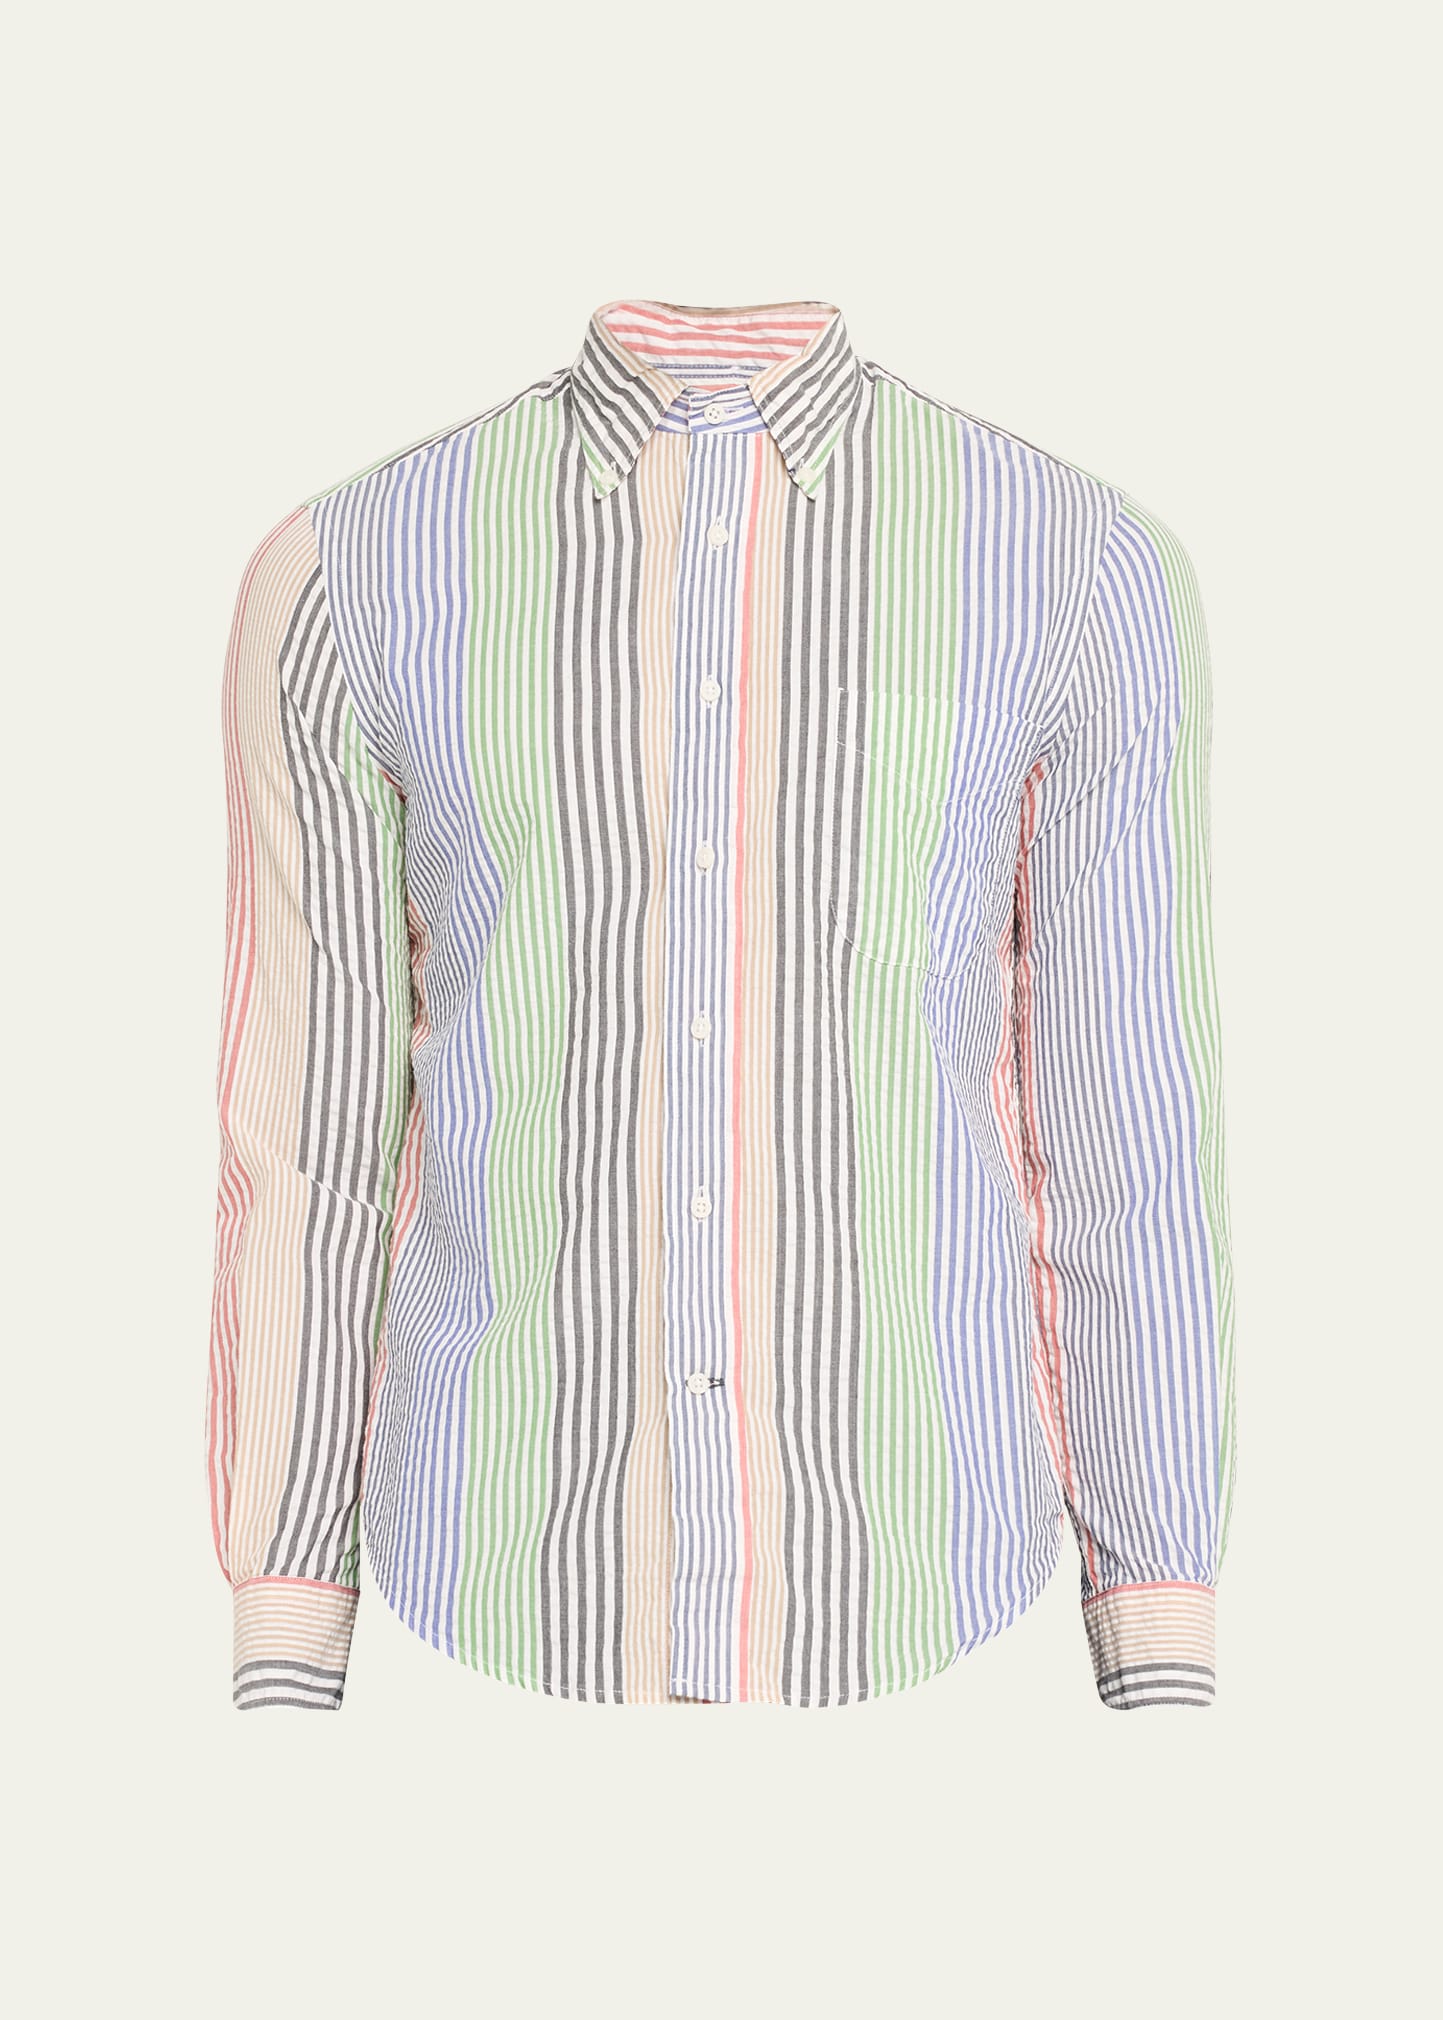 Gitman Brothers Shirt Co. Men's Multi-stripe Cotton Seersucker Shirt